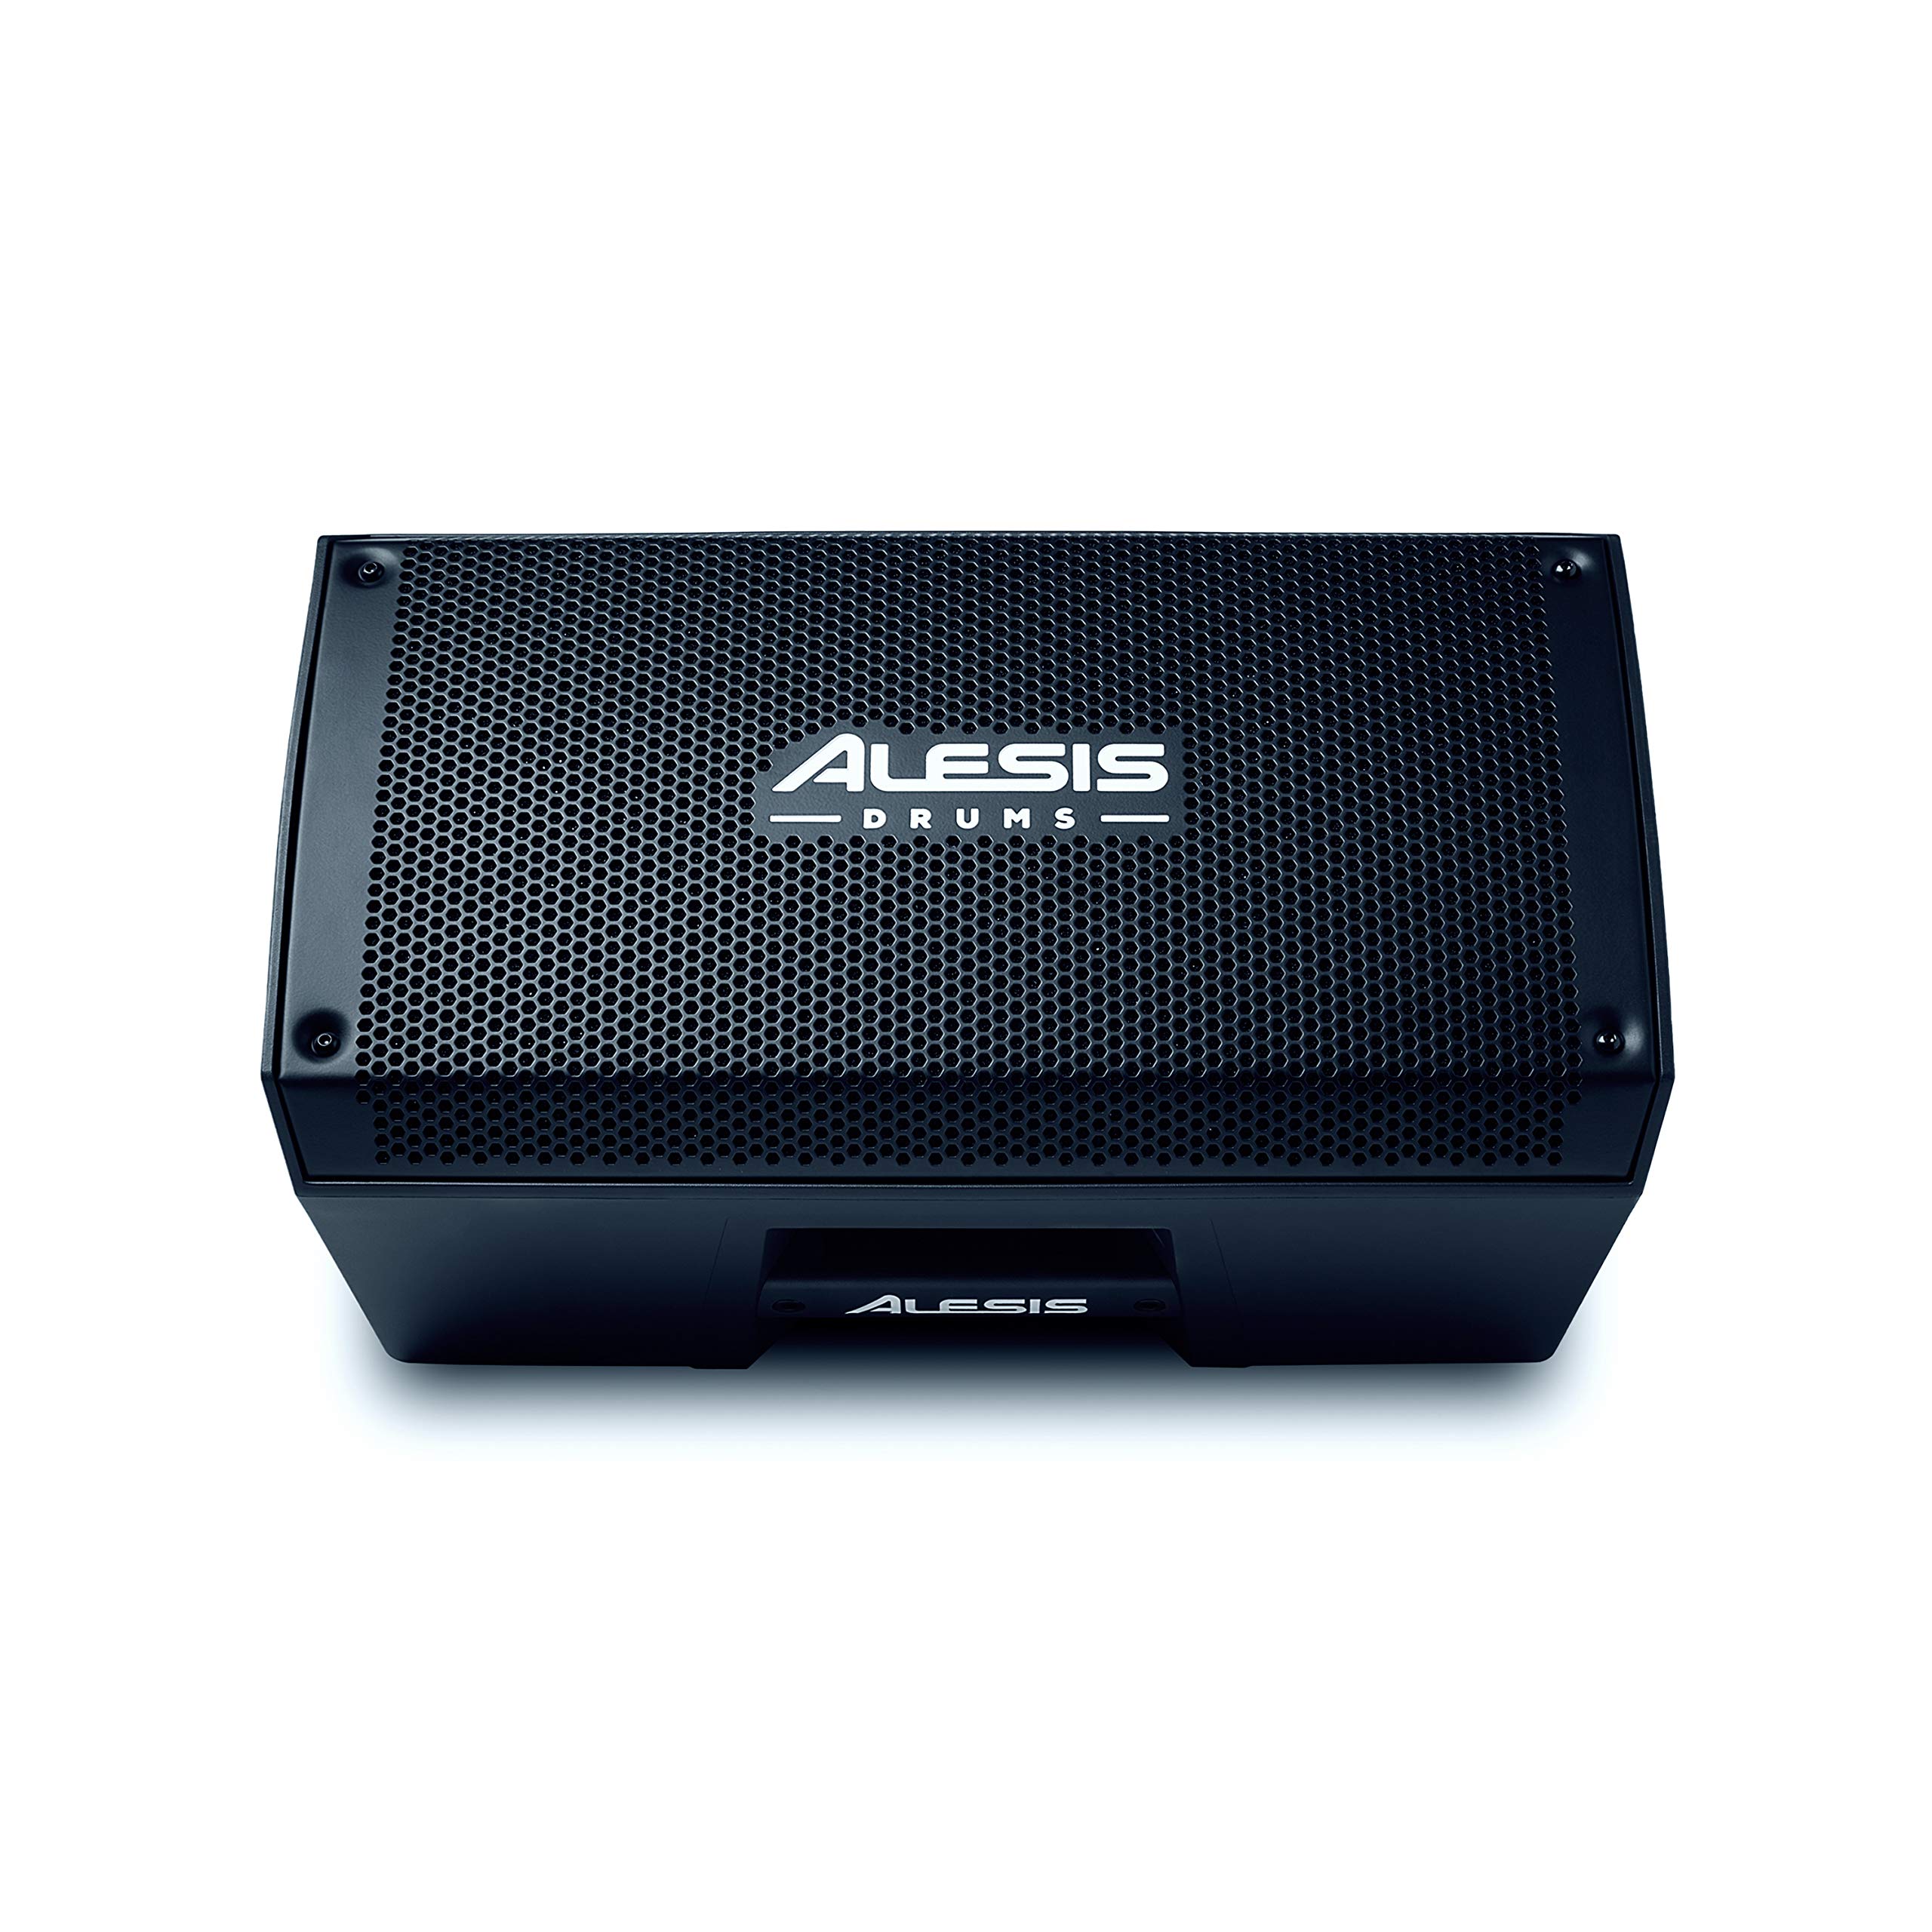 Alesis 打击放大器 8 |适用于带 8 英寸低音扬声器的电子鼓套件的 2000 瓦便携式扬声器/放大器...